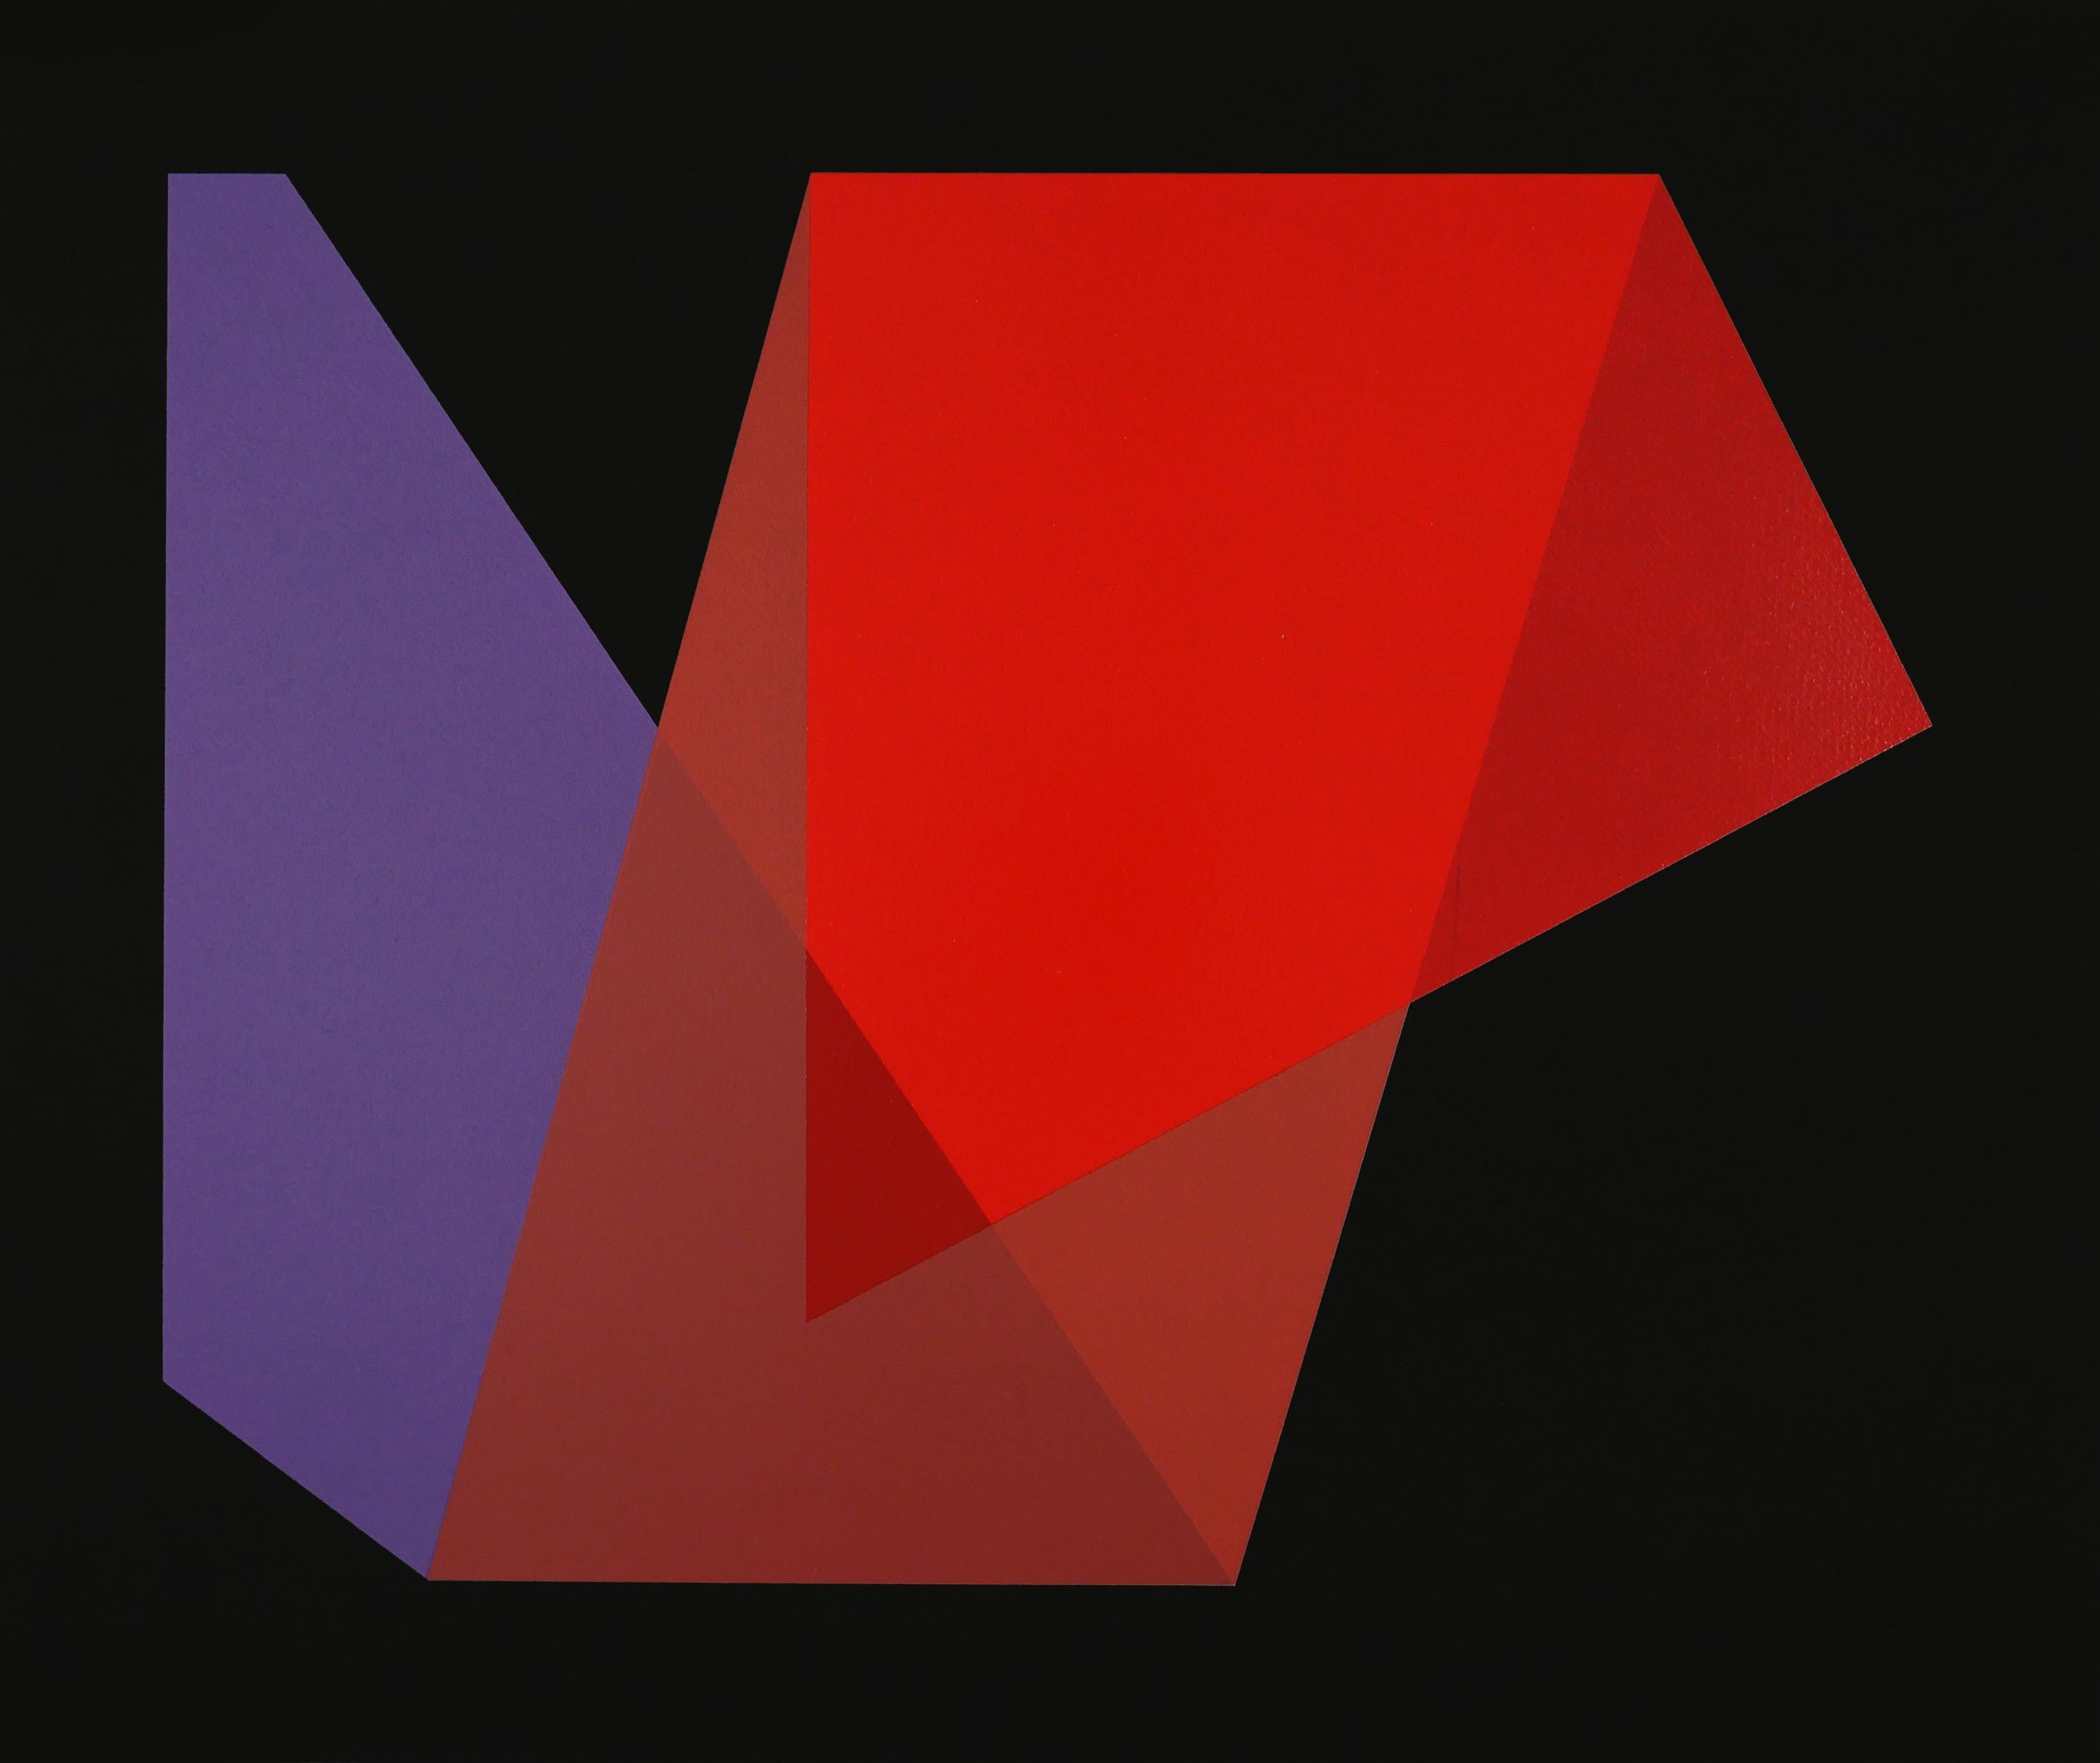 Willard Boepple Abstract Print - 'ROOSTER' 23.1.19.L, 2019 Mono screen print 48 x 58 cm 